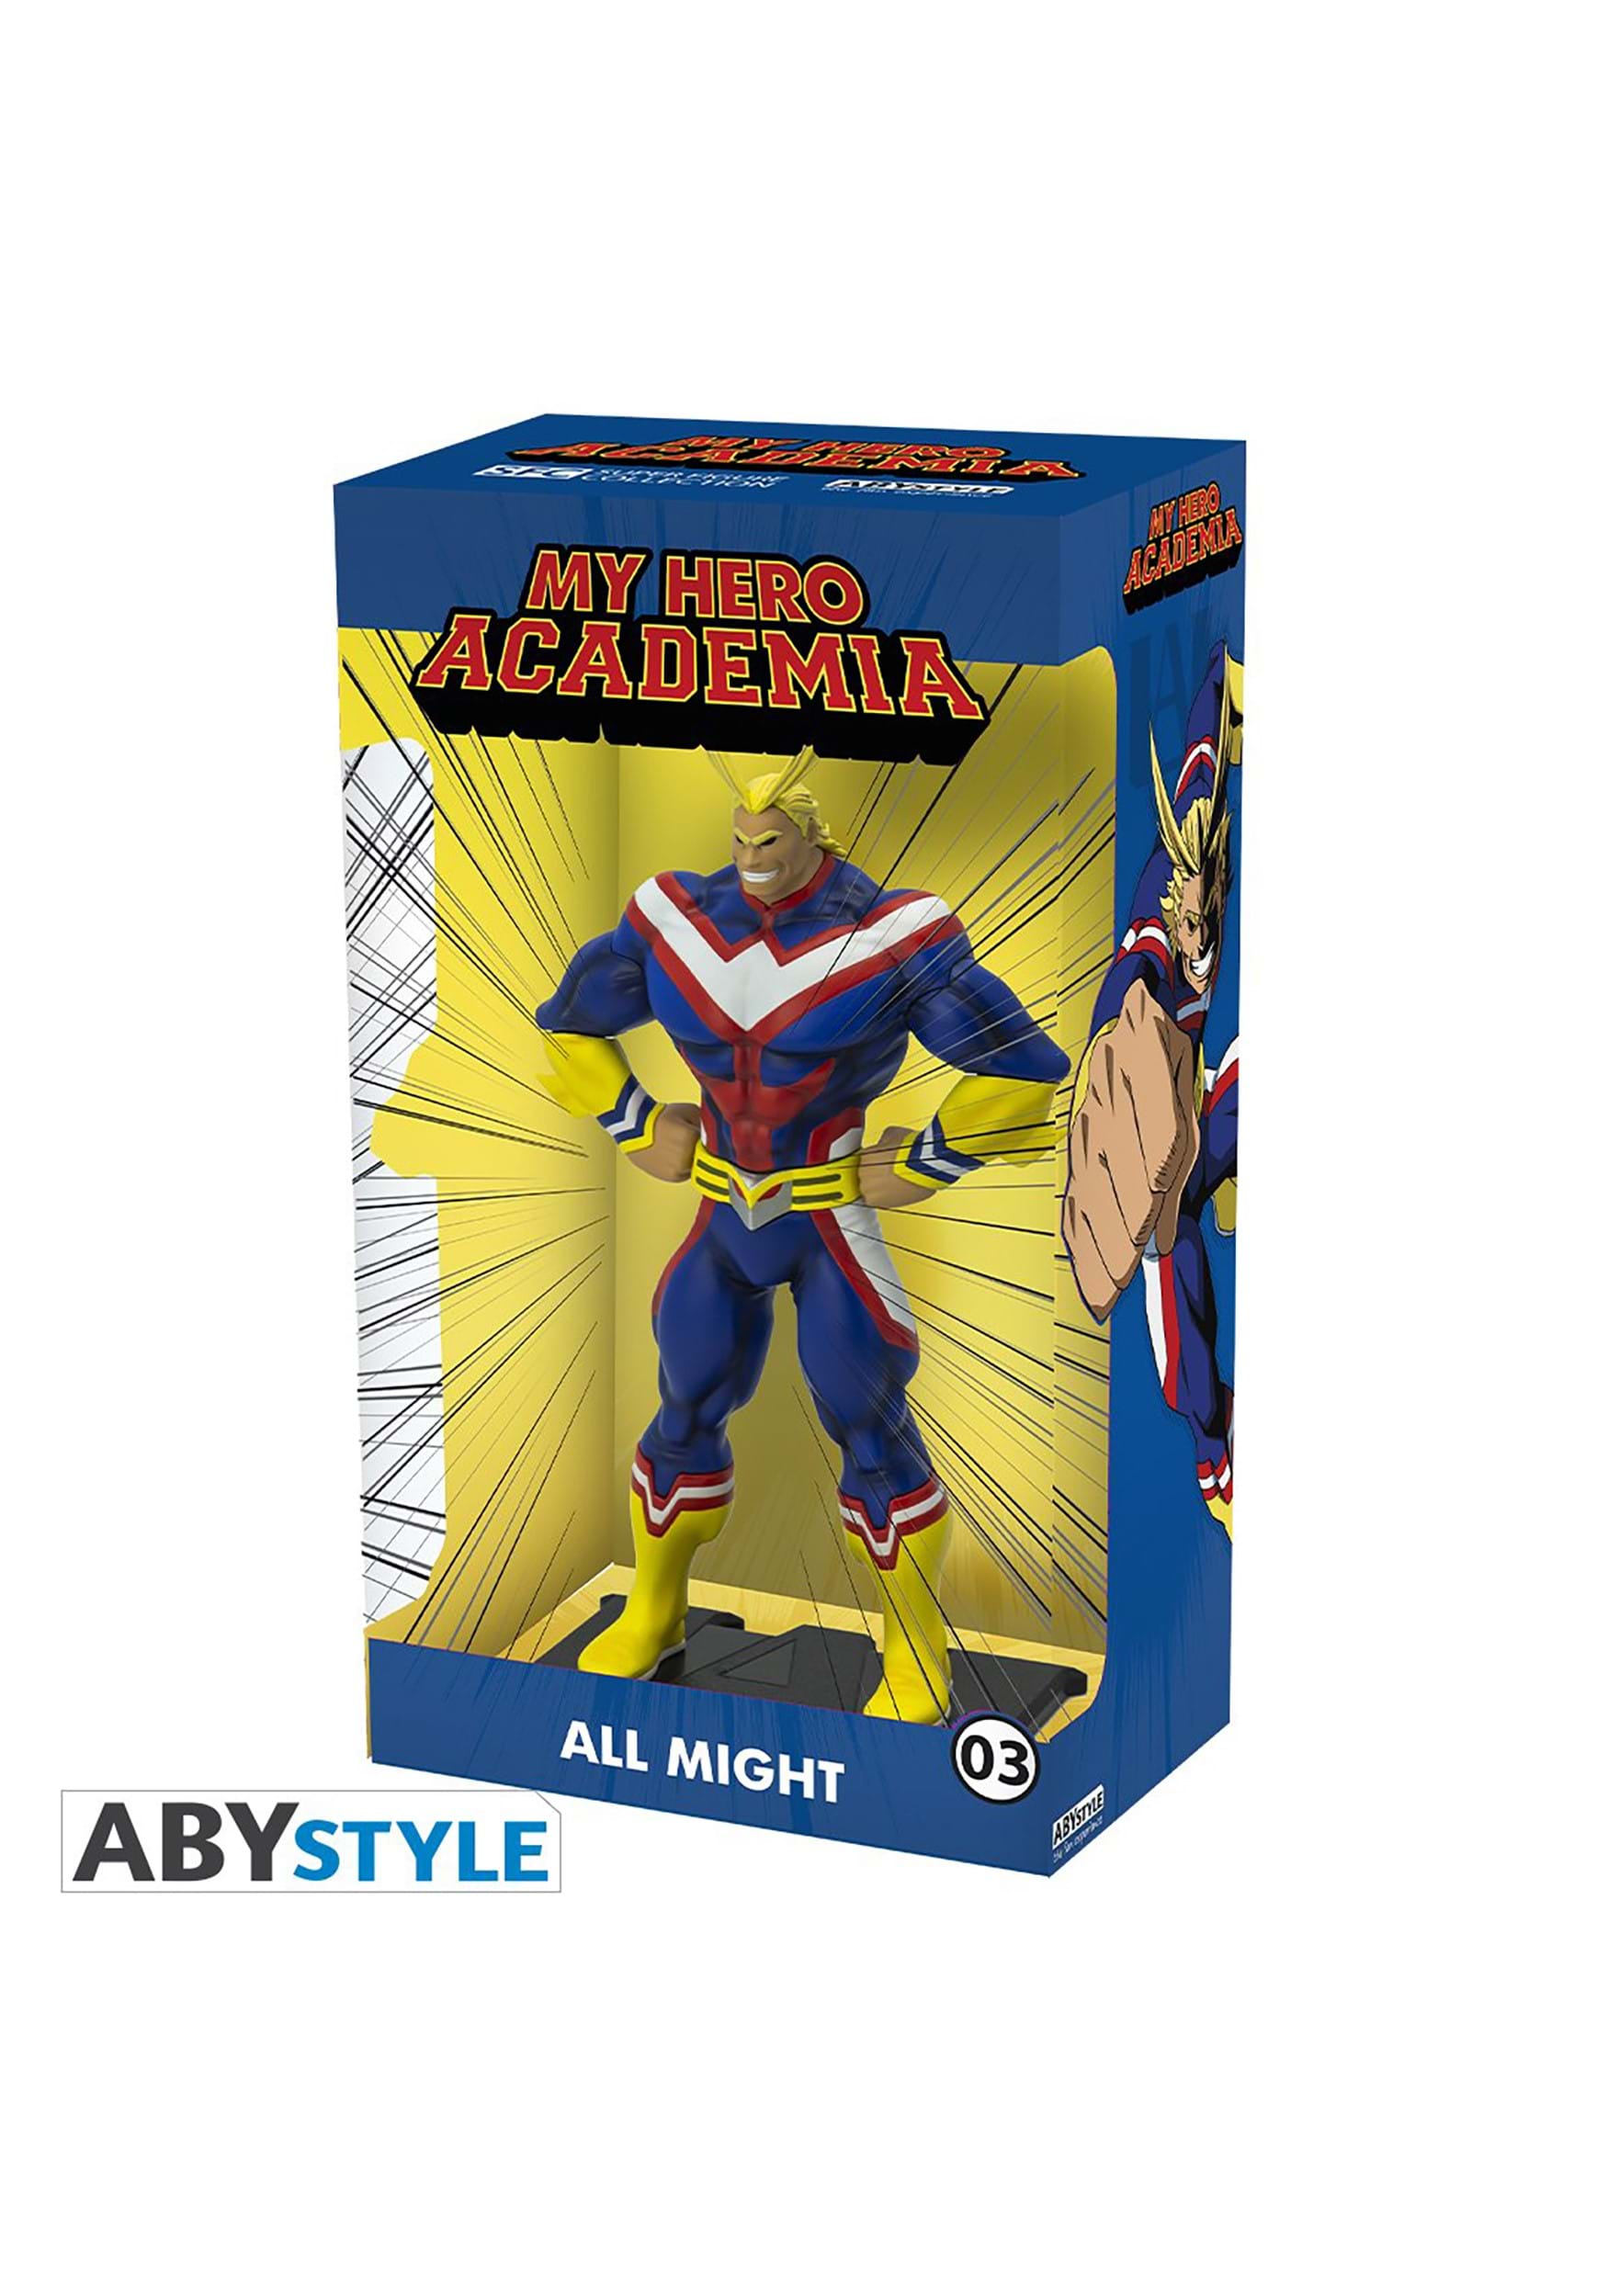 My Hero Academia - All Might Figure #003